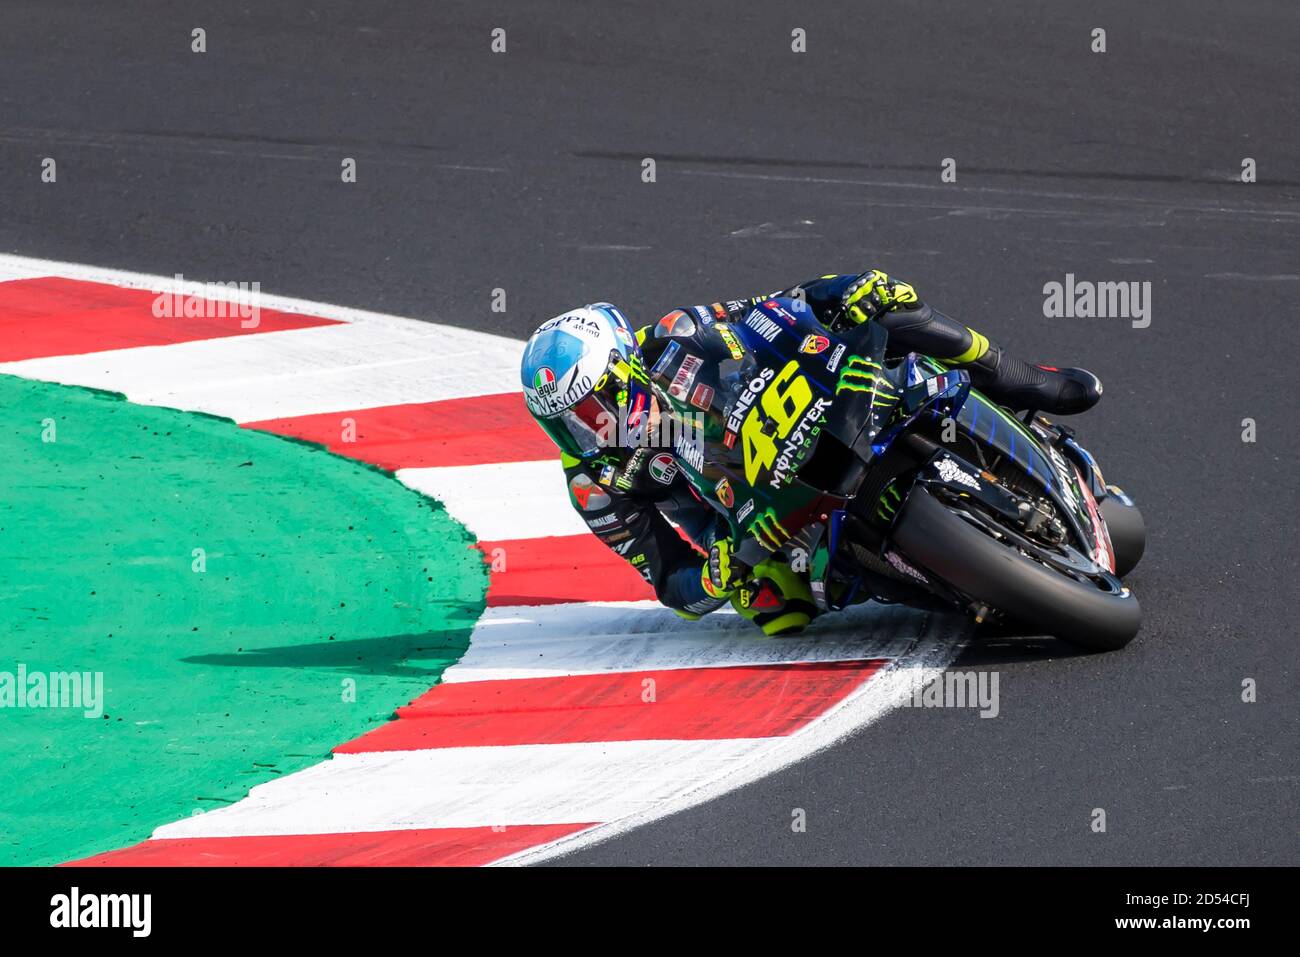 Moto GP Emilia Romagna, Misano, september 2020:Valentino Rossi Rider Stockfoto